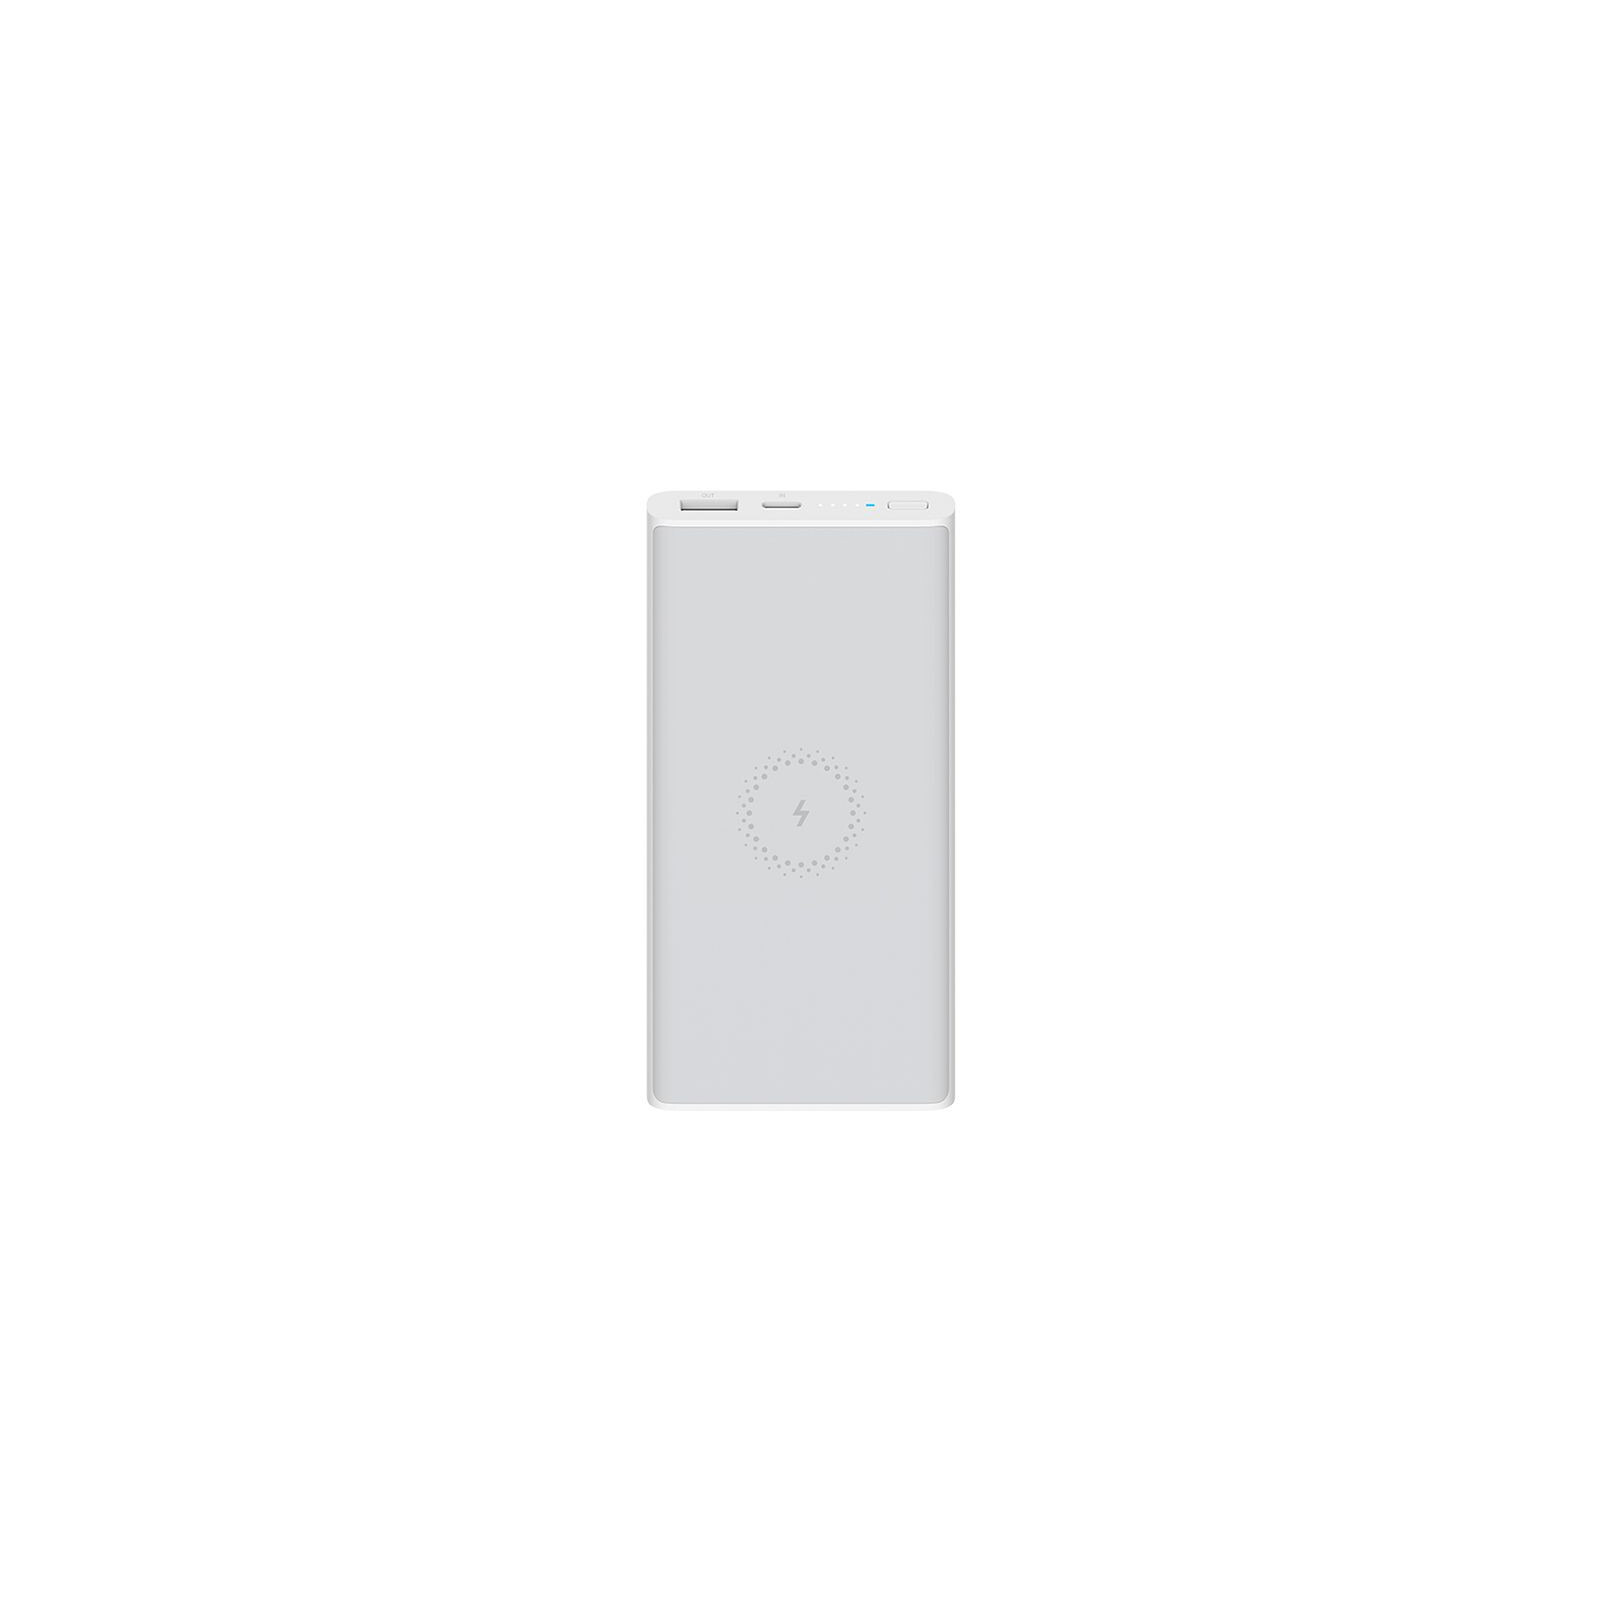 Батарея универсальная Xiaomi Mi Wireless Youth Edition 10000 mAh White (562530)